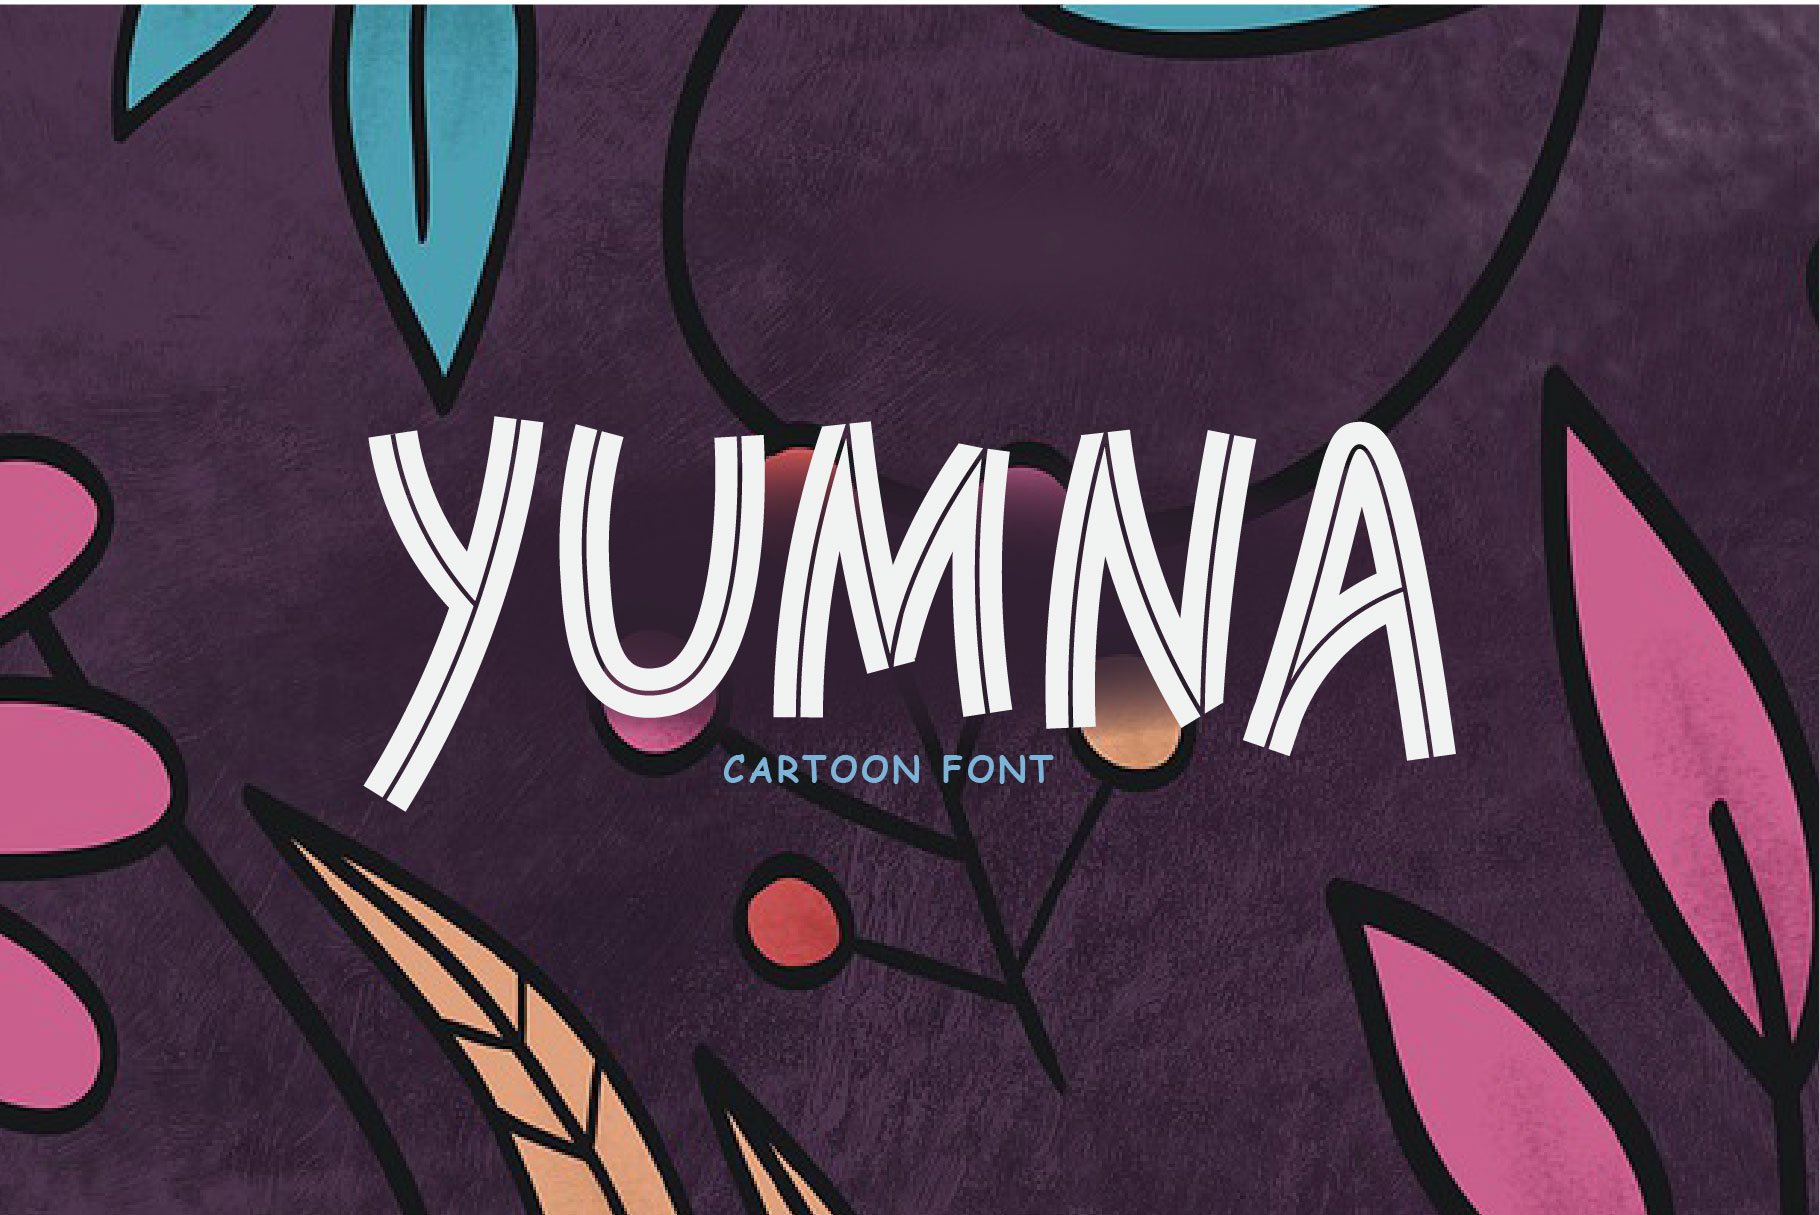 Yumna | Cartoon font cover image.